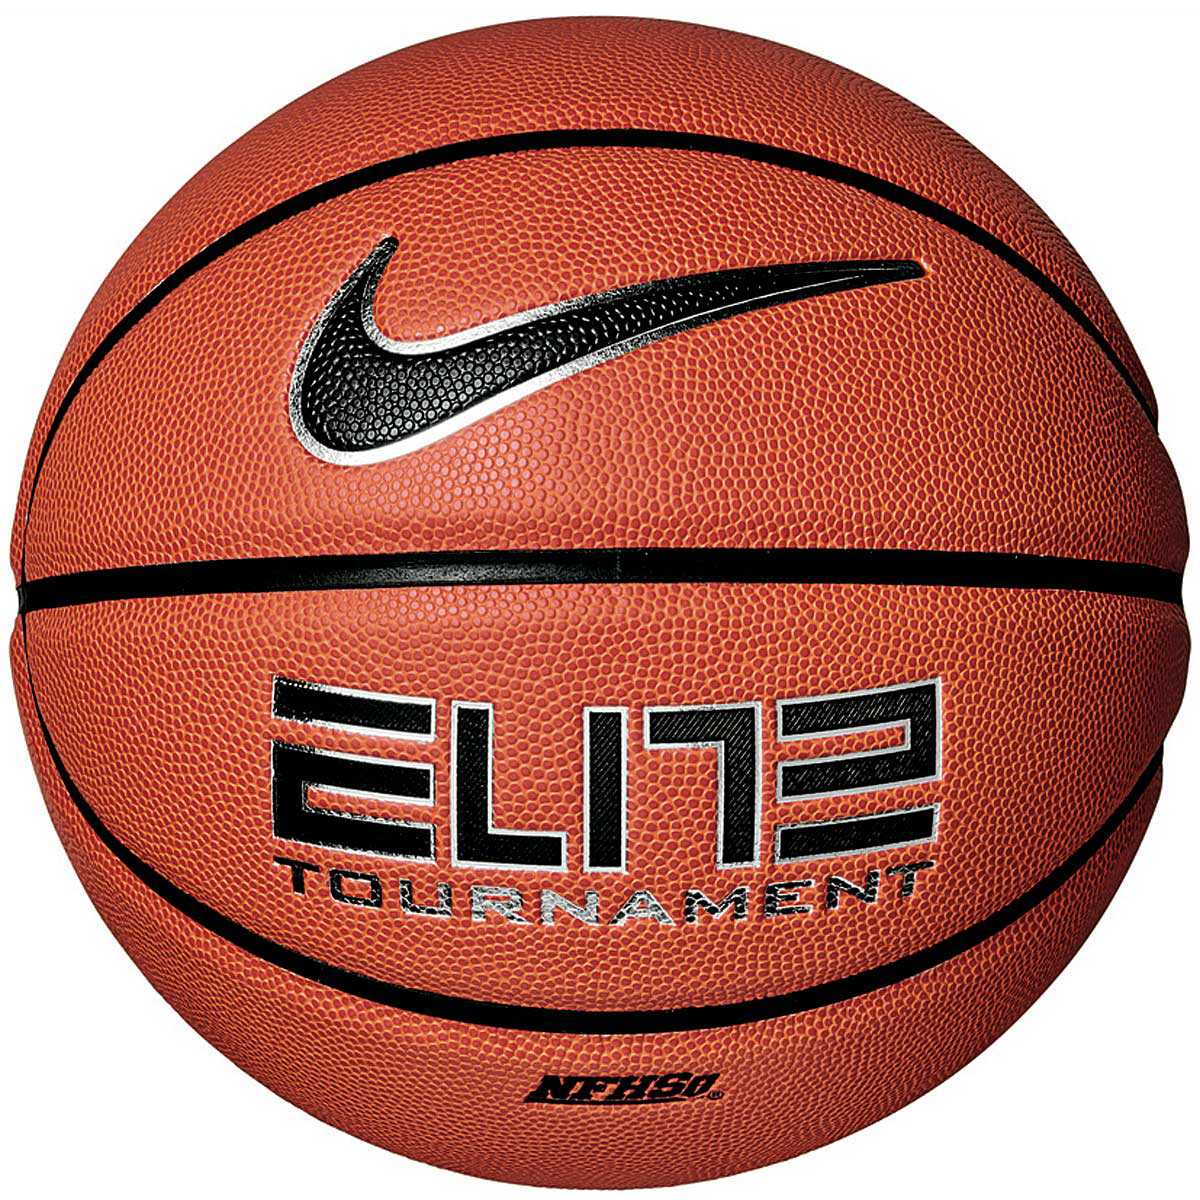 Nike Elite Tournament Basketball, 855 Amber/Black/Metallic Silver/Black